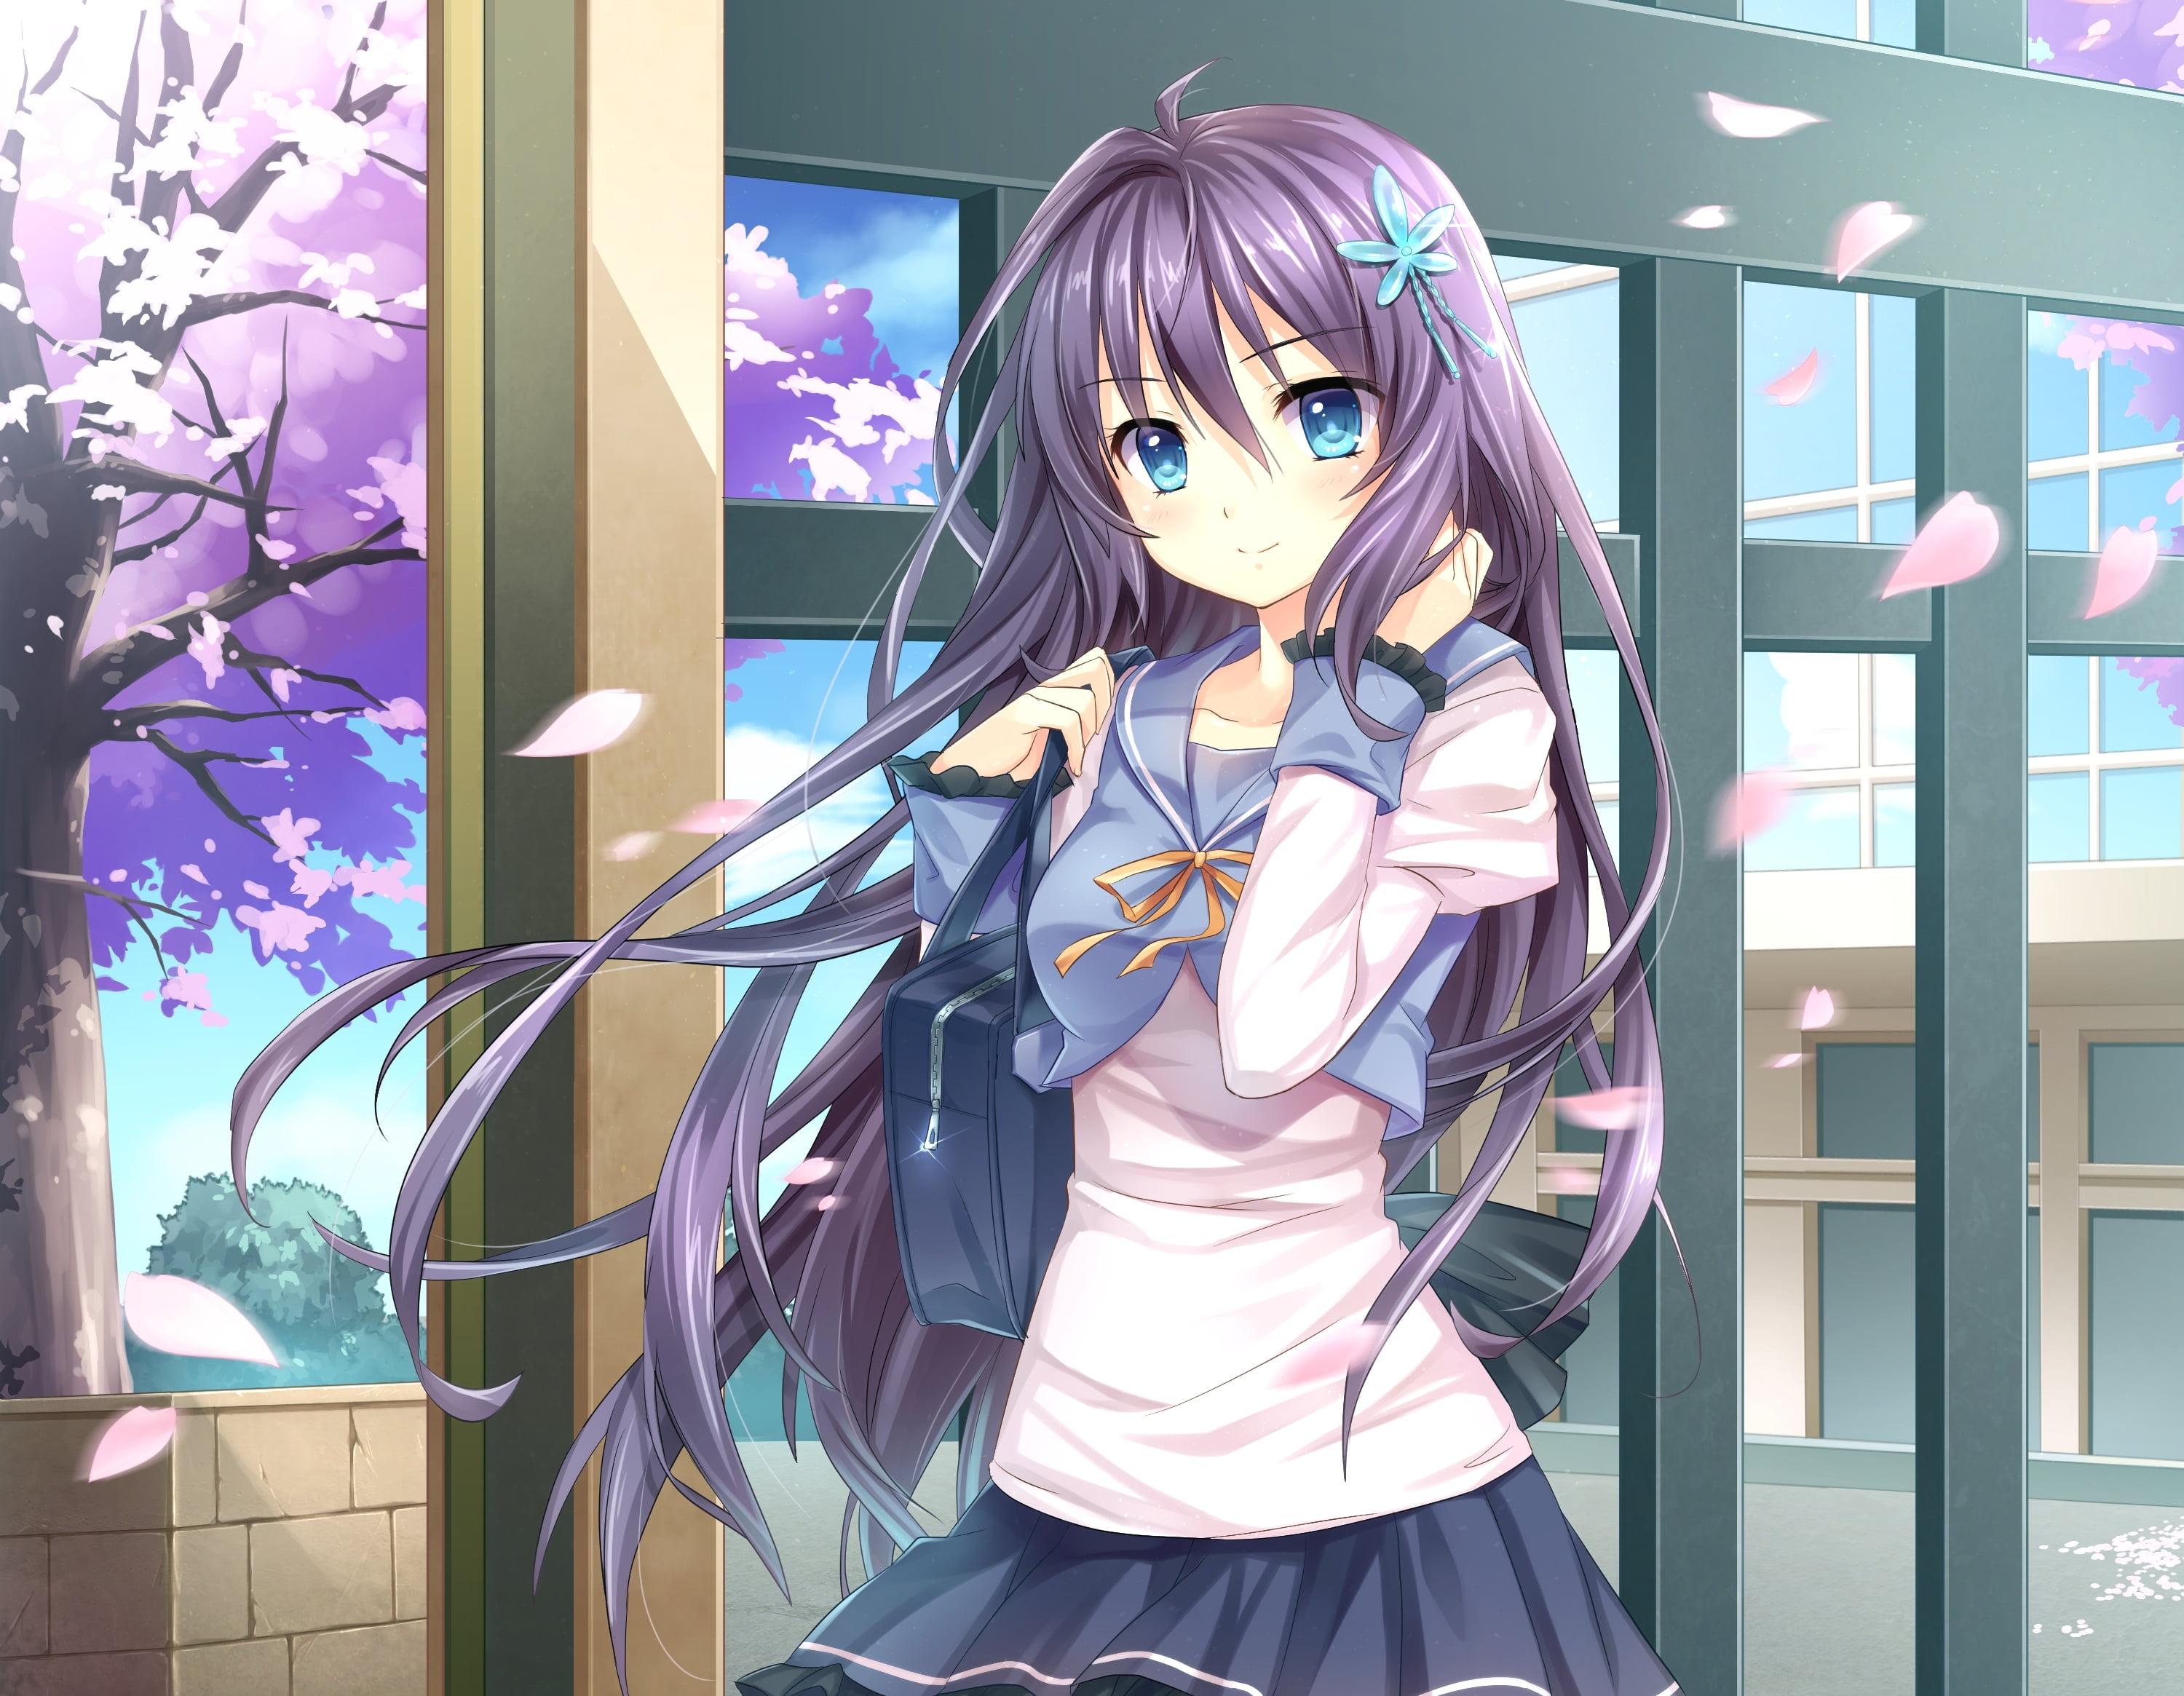 magic anime girl with purple hair